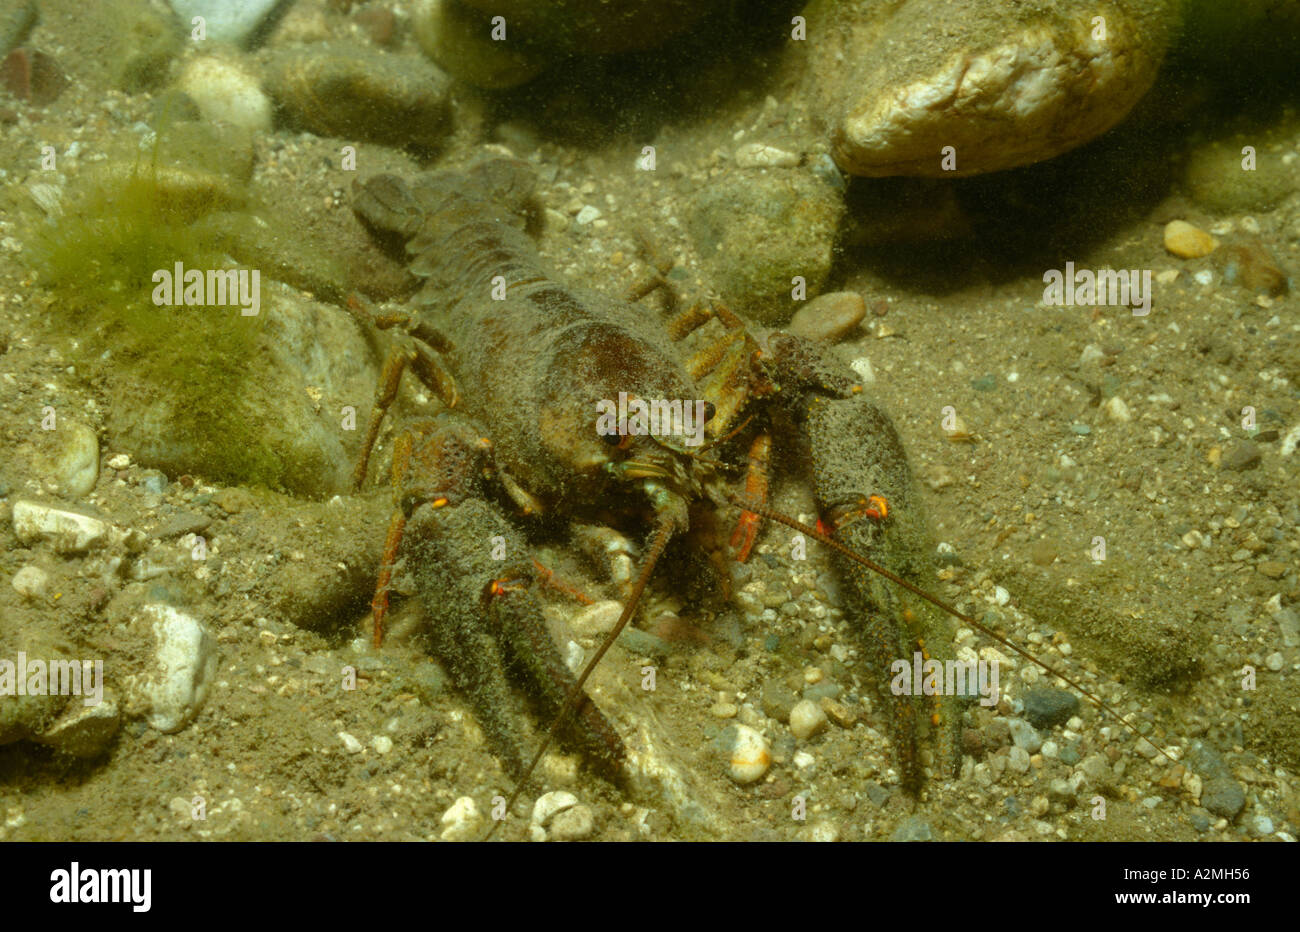 European crayfish Noble crayfish Broad fingered crayfish Astacus astacus Stock Photo